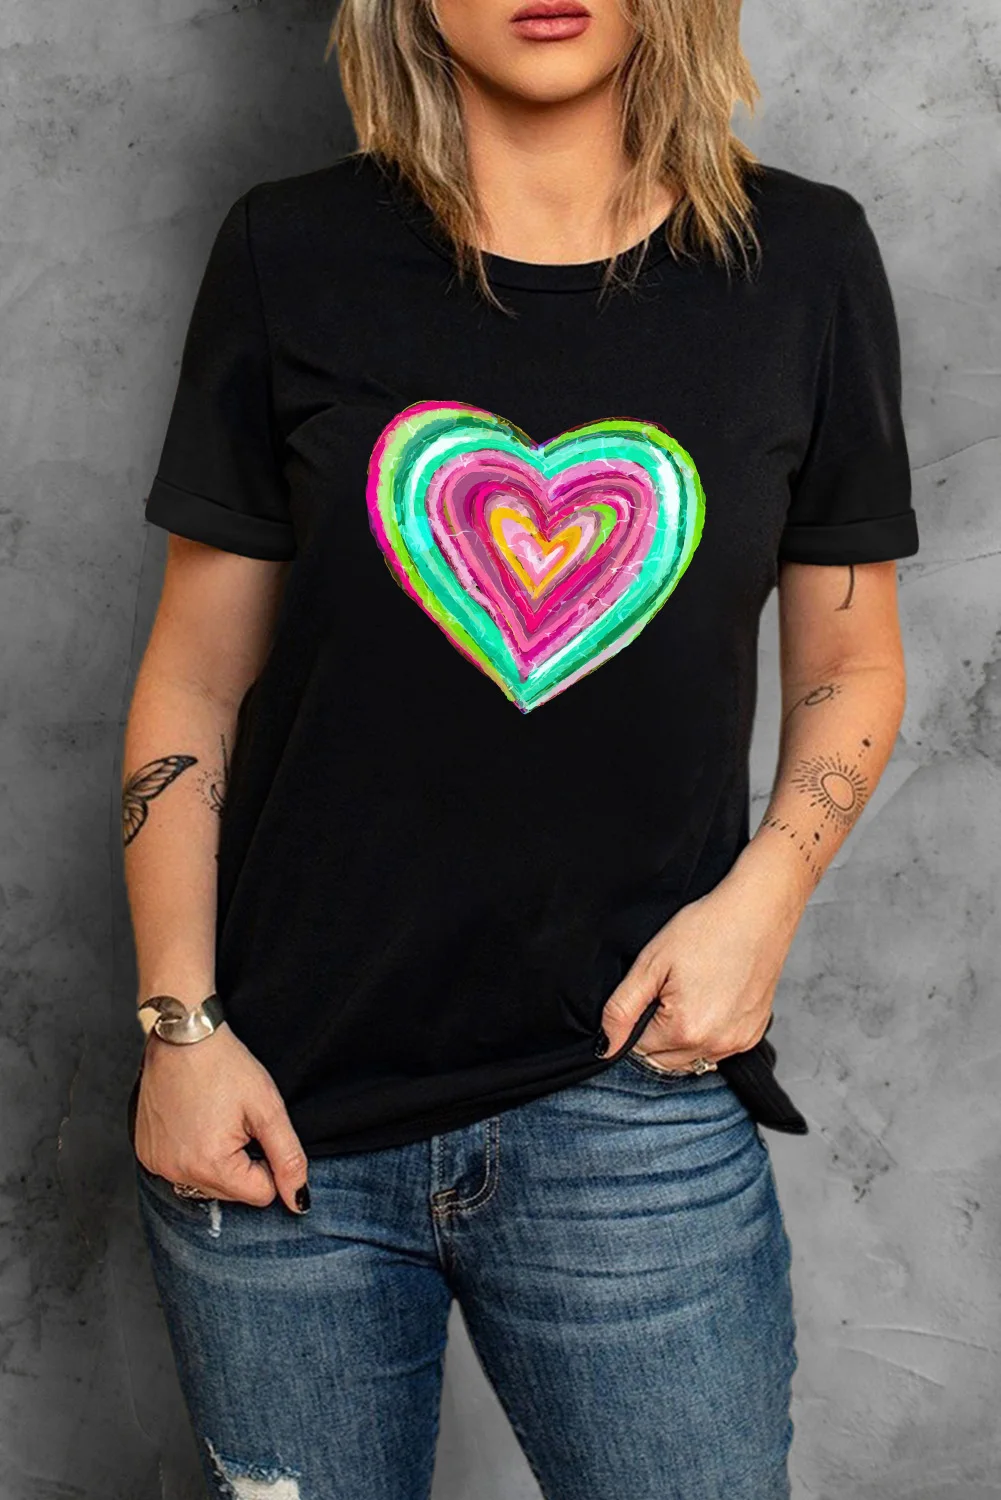 Dear-Lover Black Valentine Heart Shaped Print Crew Neck Girls T-Shirts For Women